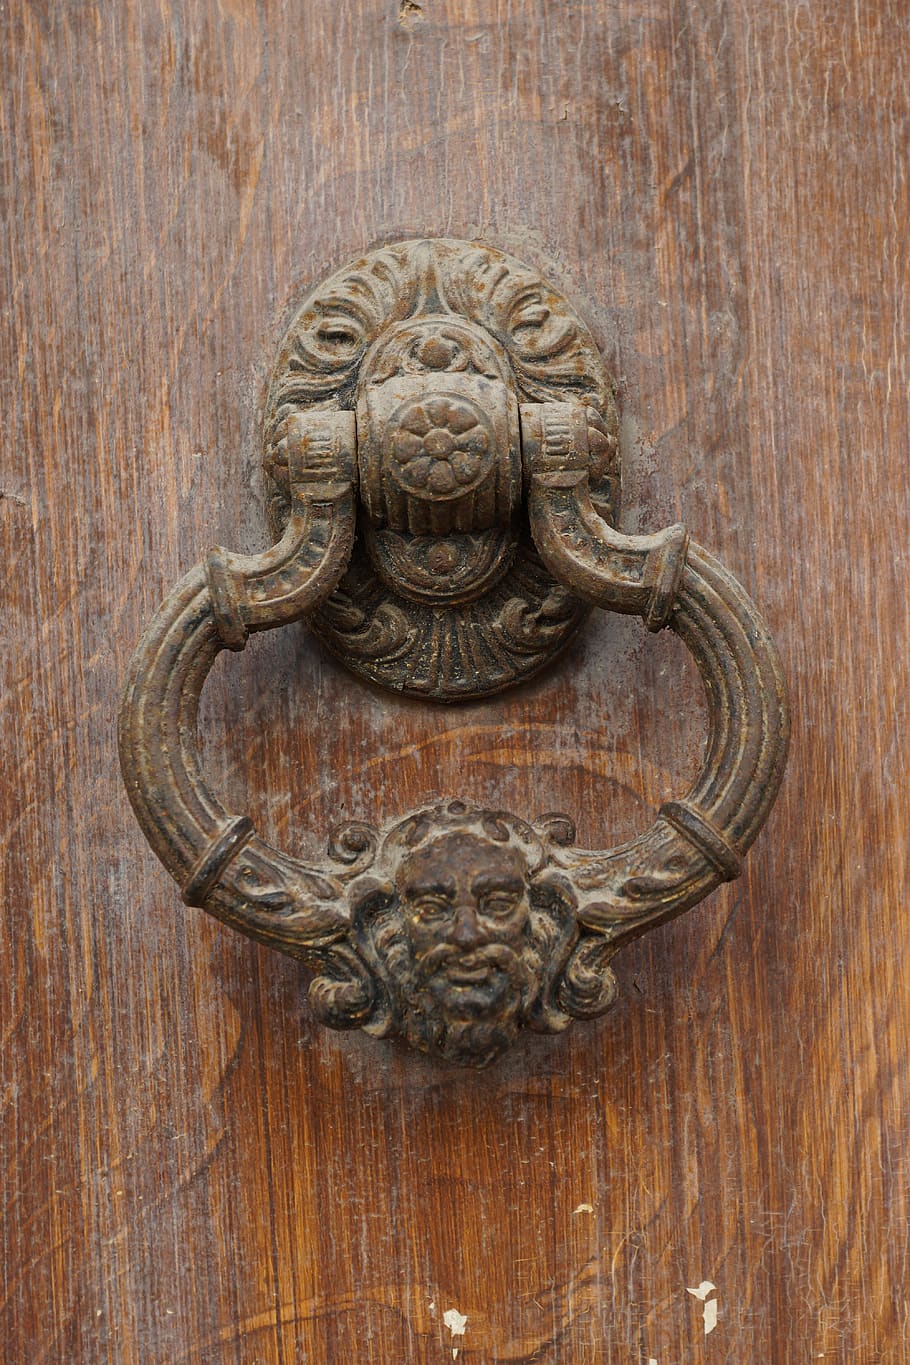 door, flying, knocker, entrance, wood - material, door knocker, metal, ornate, art and craft, close-up